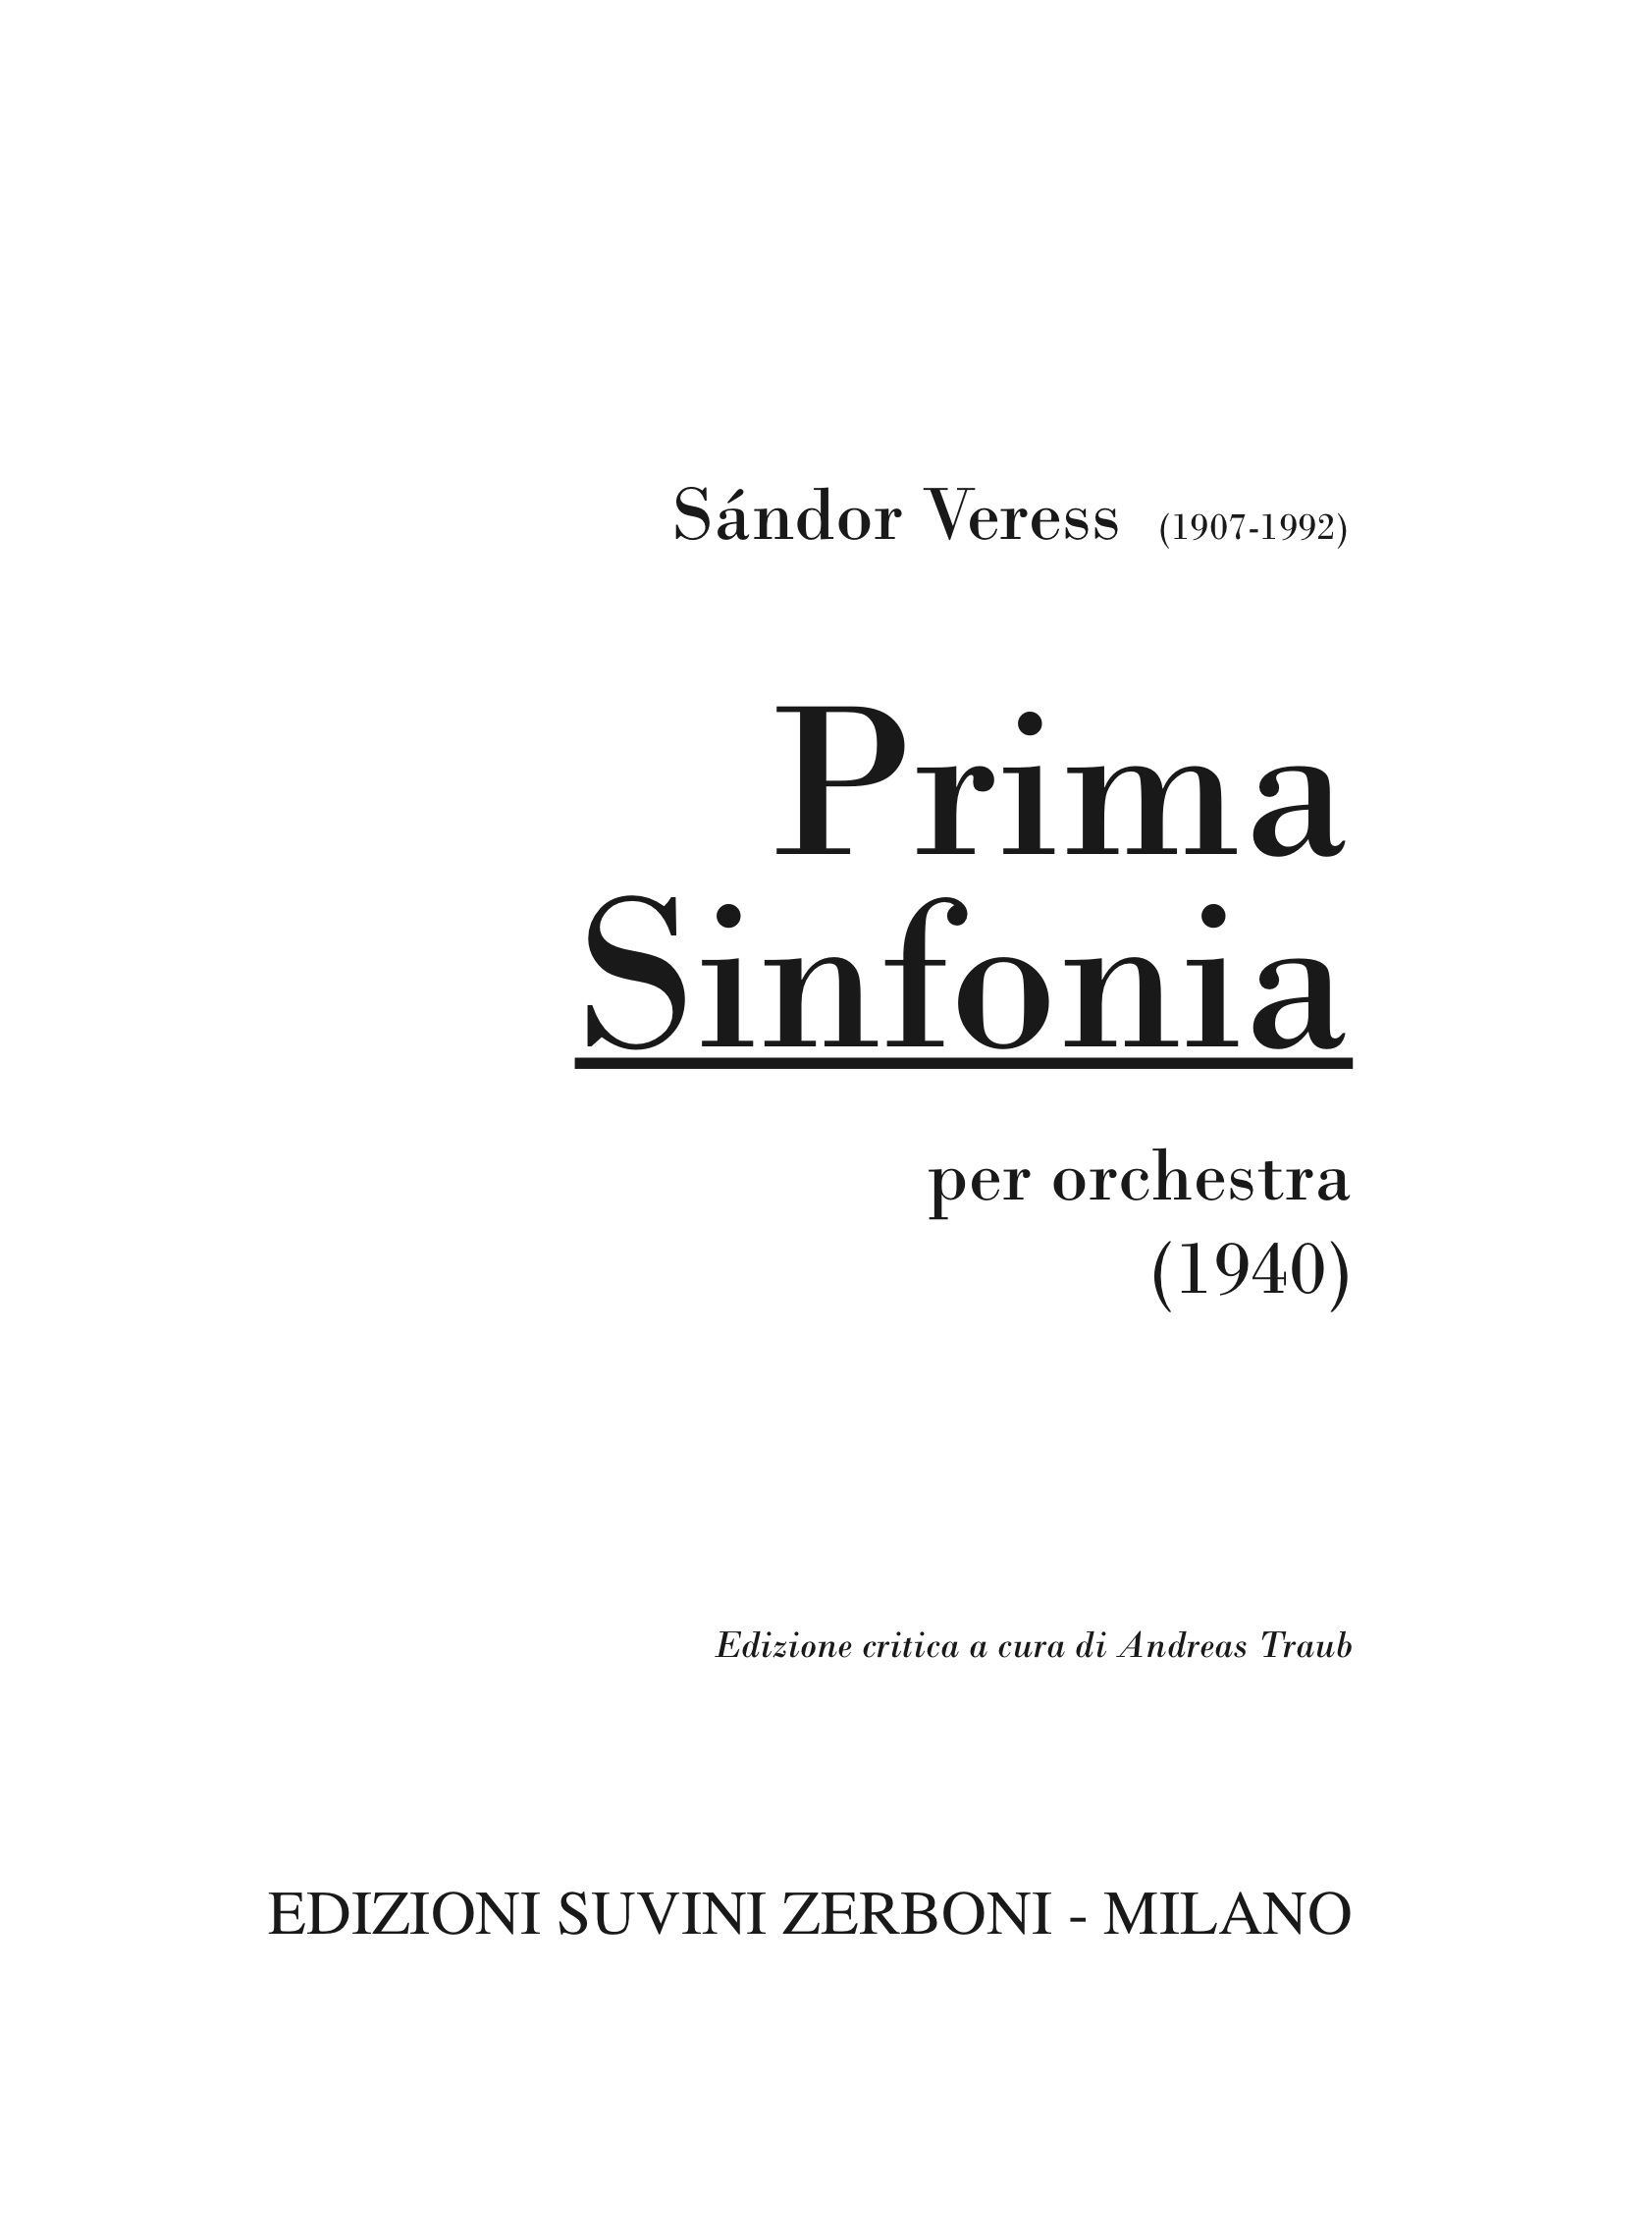 Prima Sinfonia_Veress 1